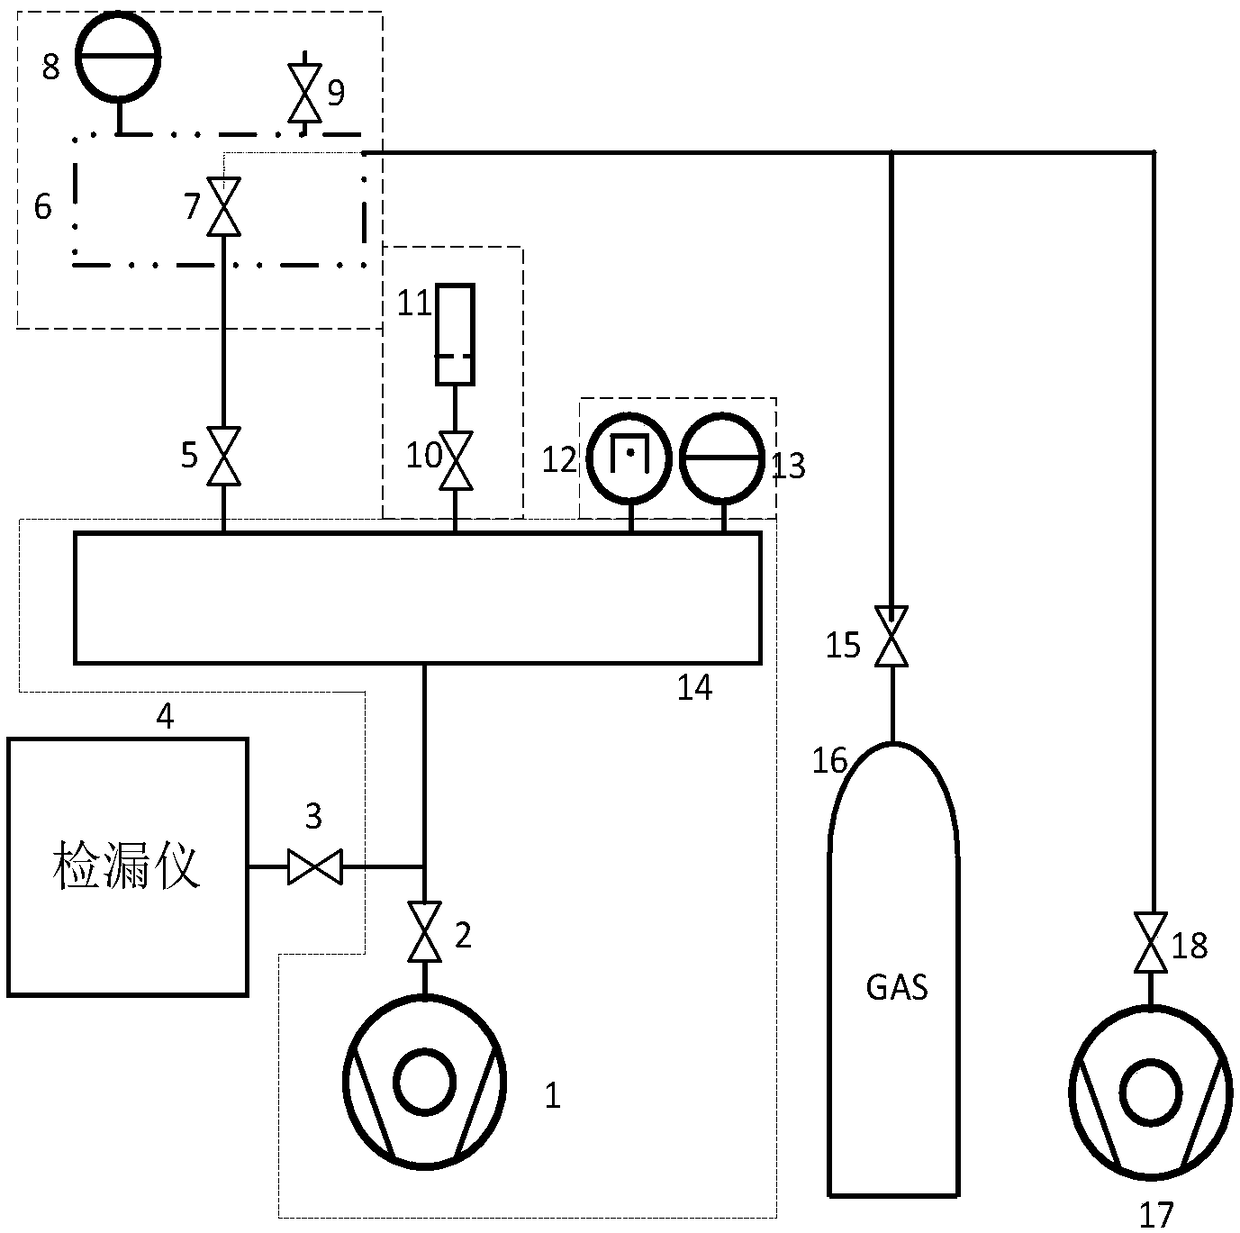 Vacuum sealed valve leakage rate test system and method